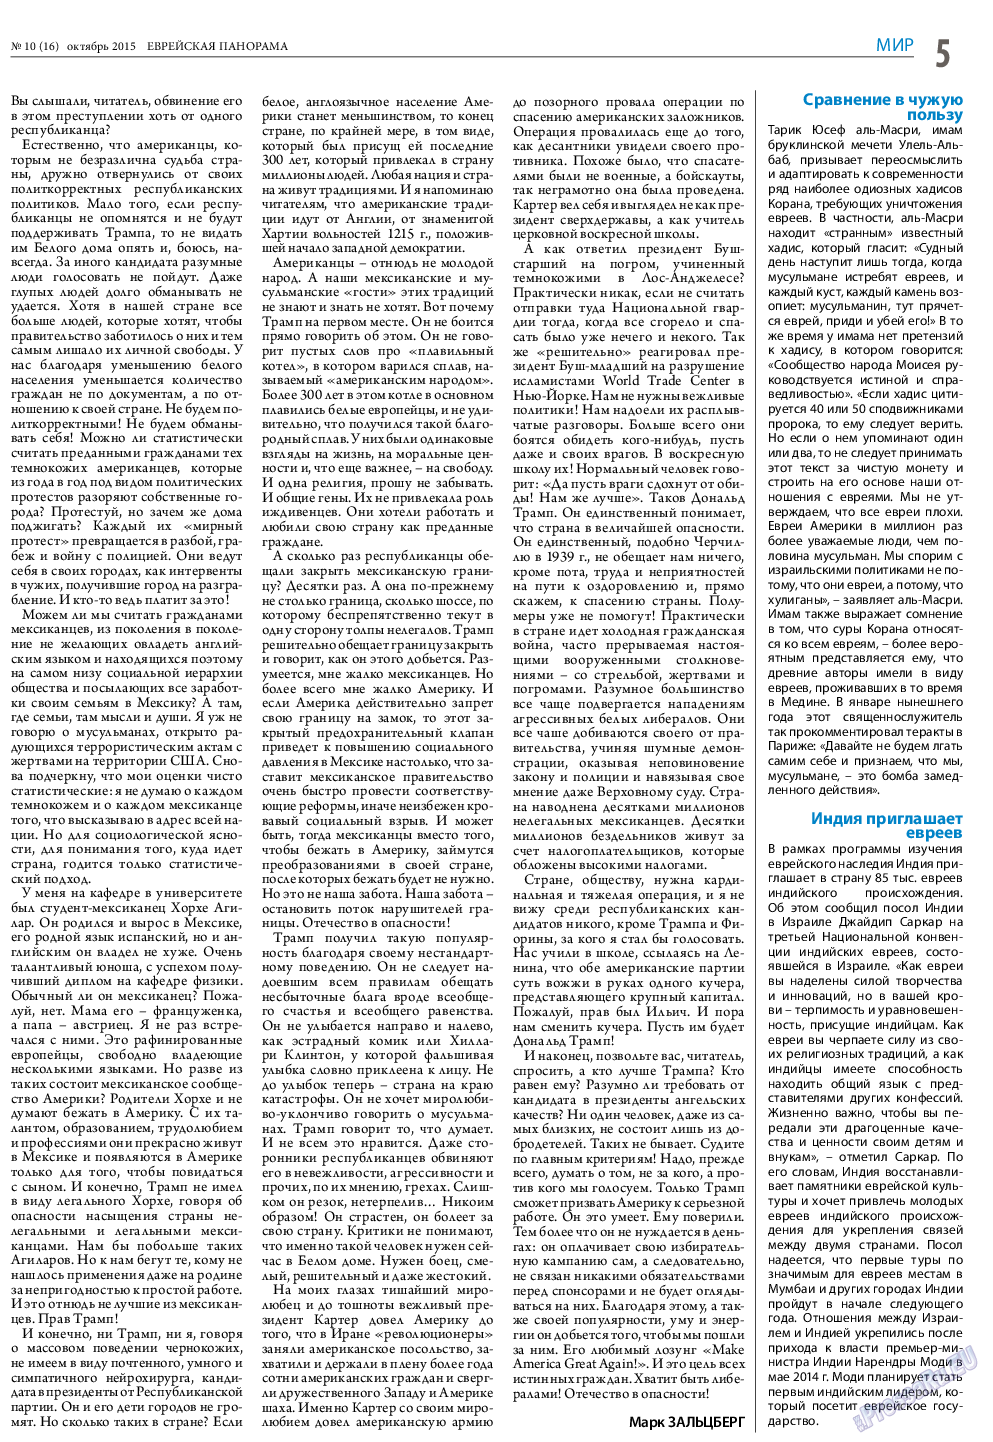 Еврейская панорама, газета. 2015 №10 стр.5